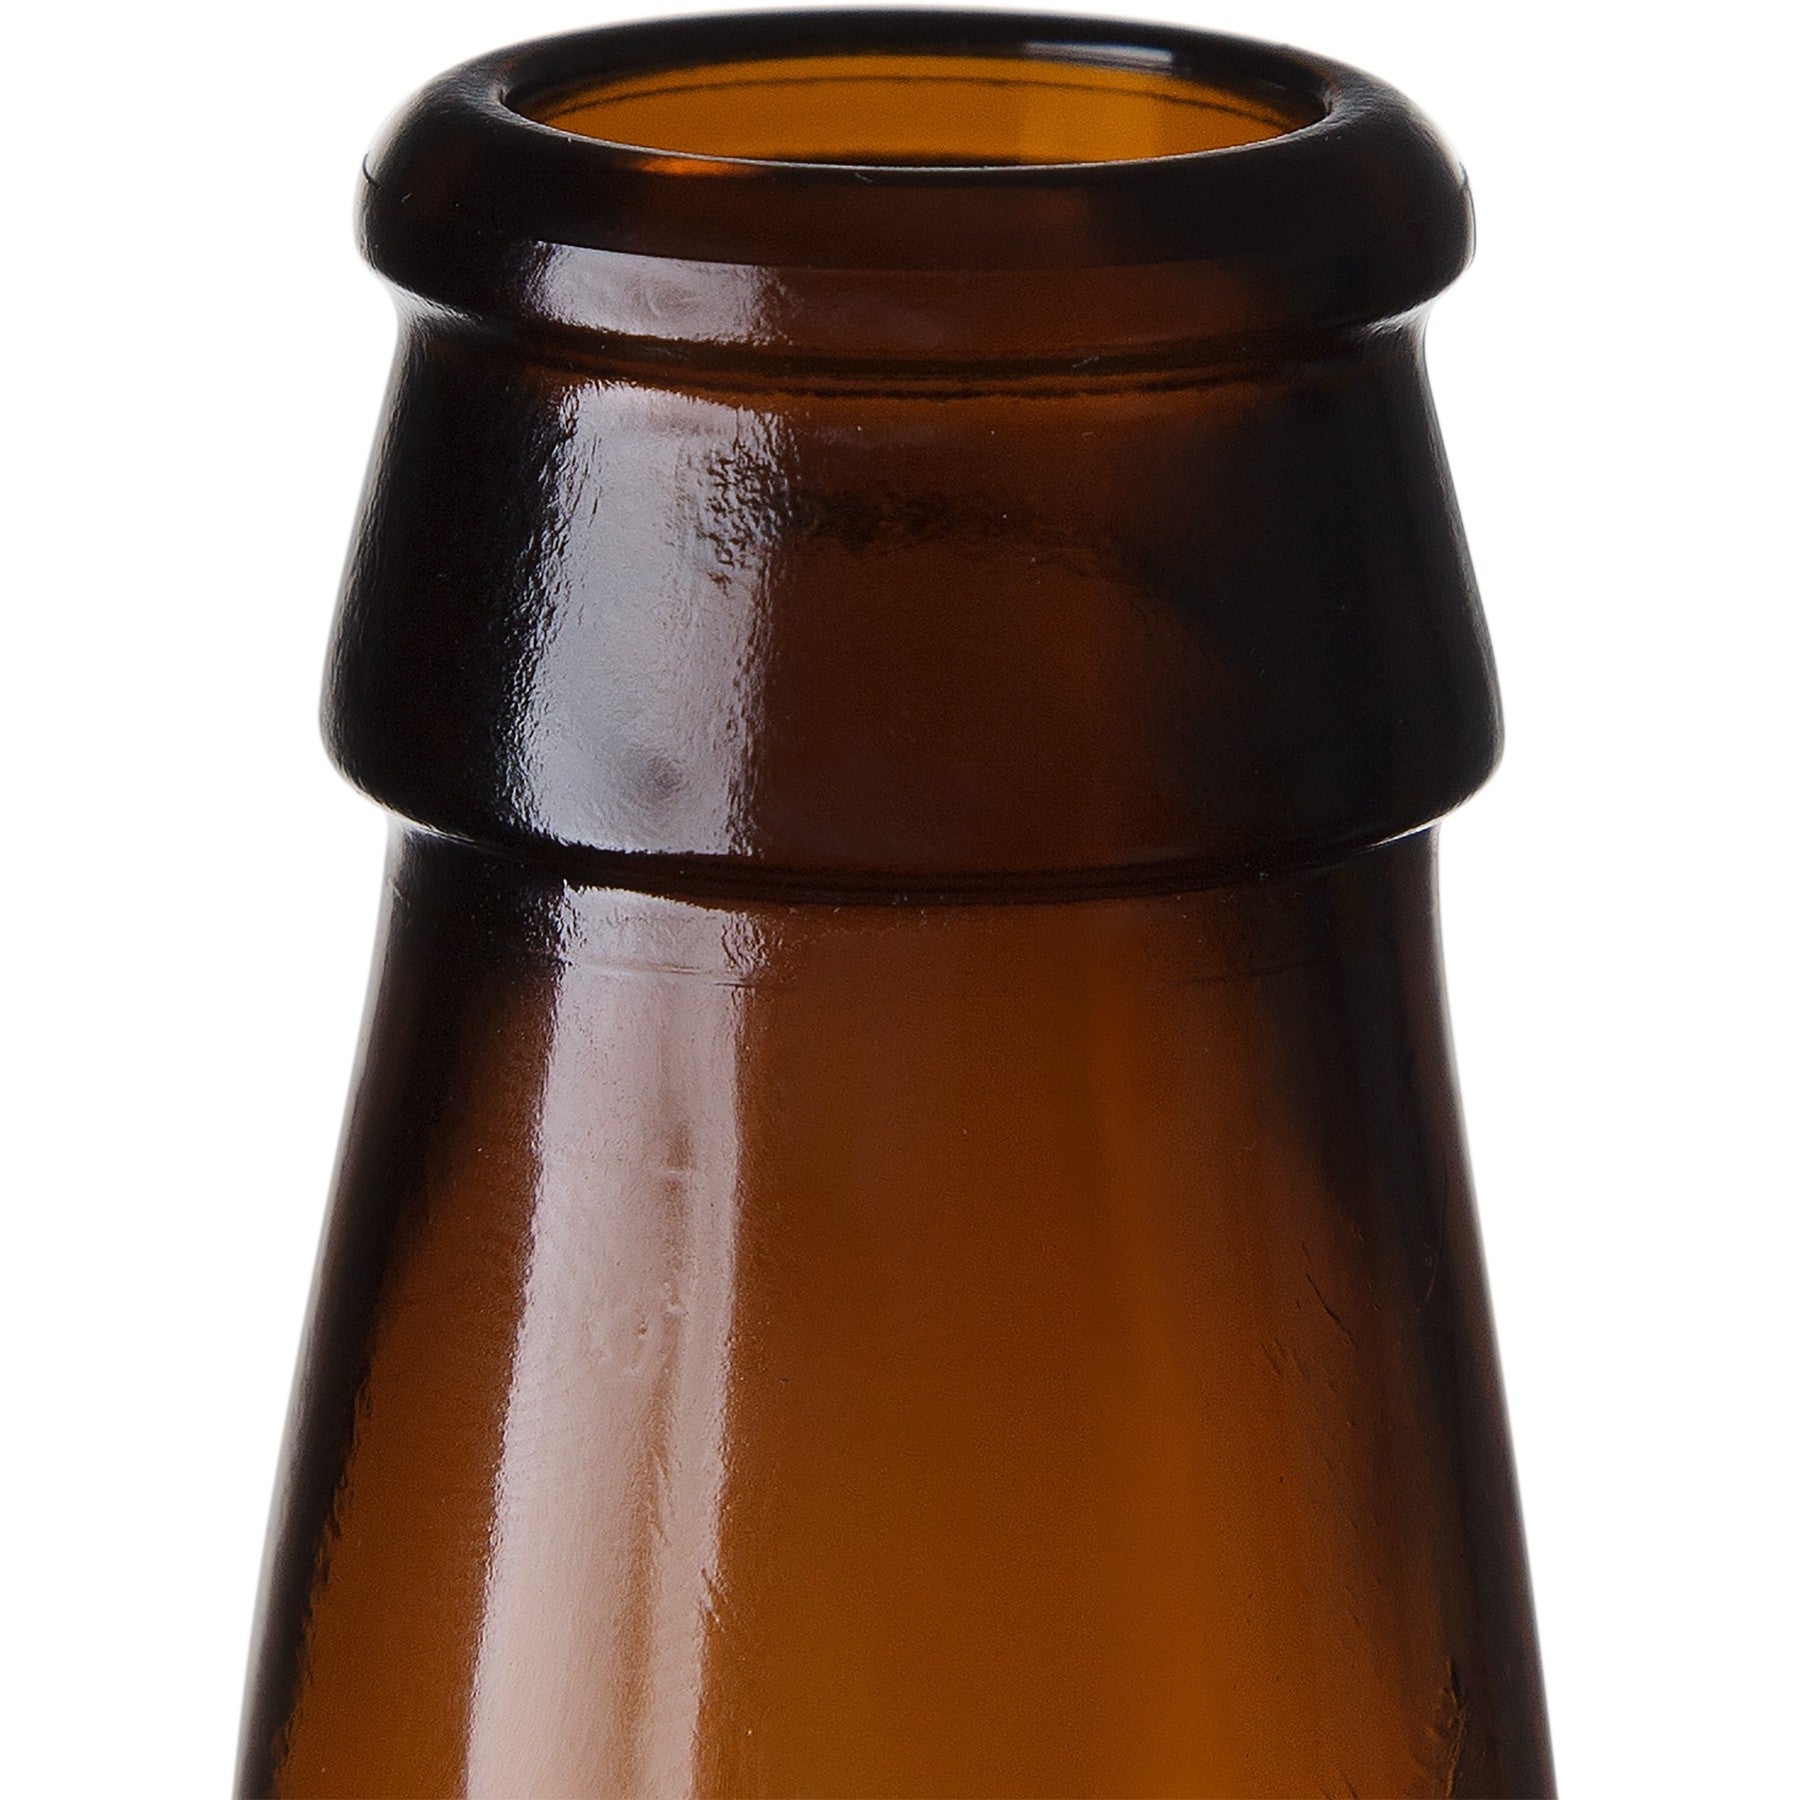 12 oz Longneck Beer Bottles - Case of 24